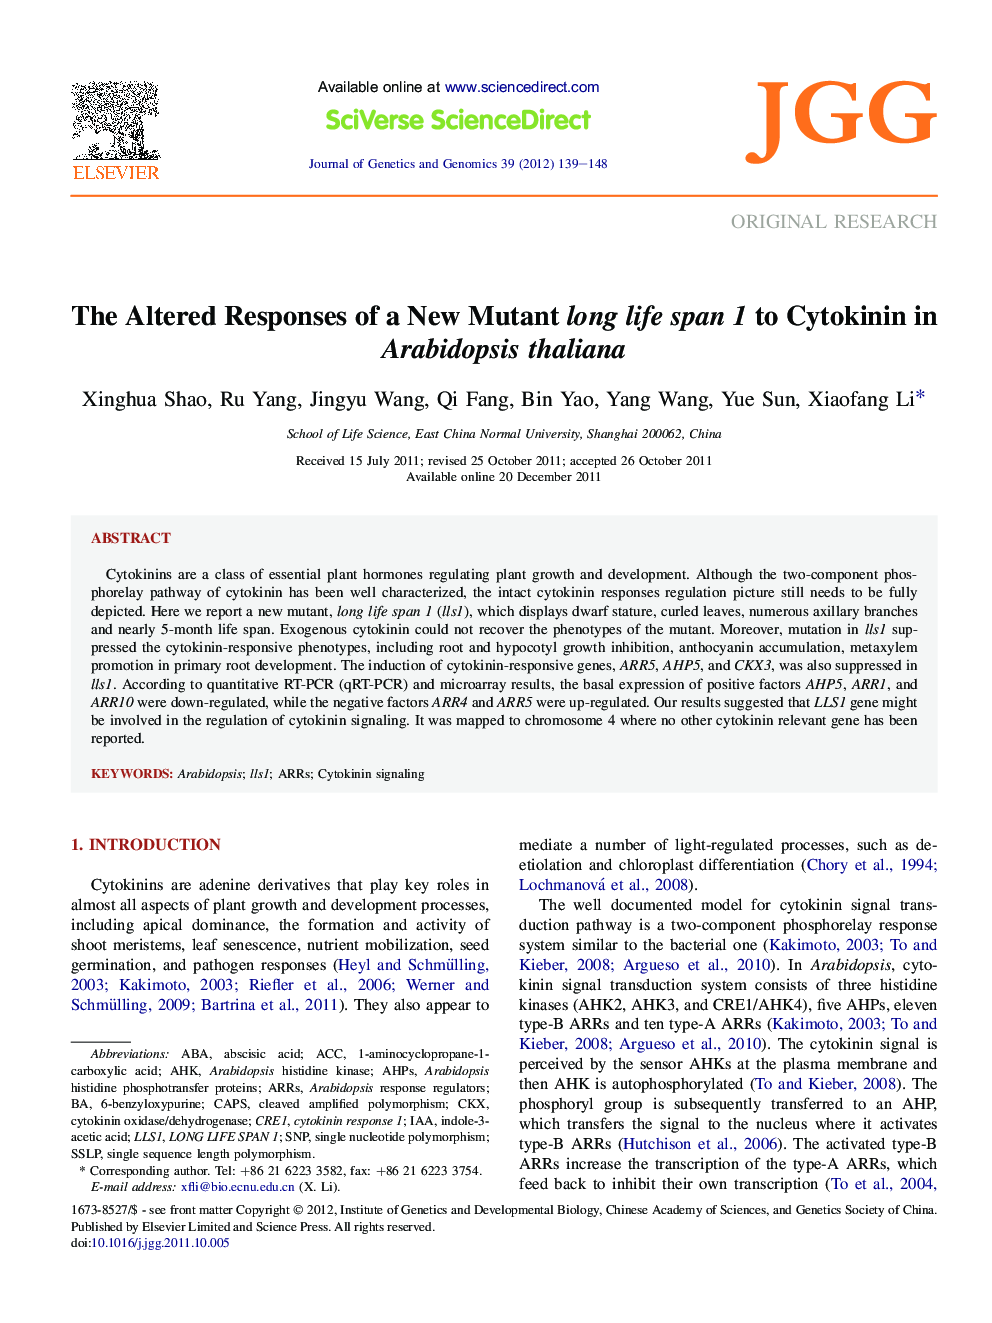 The Altered Responses of a New Mutant long life span 1 to Cytokinin in Arabidopsis thaliana